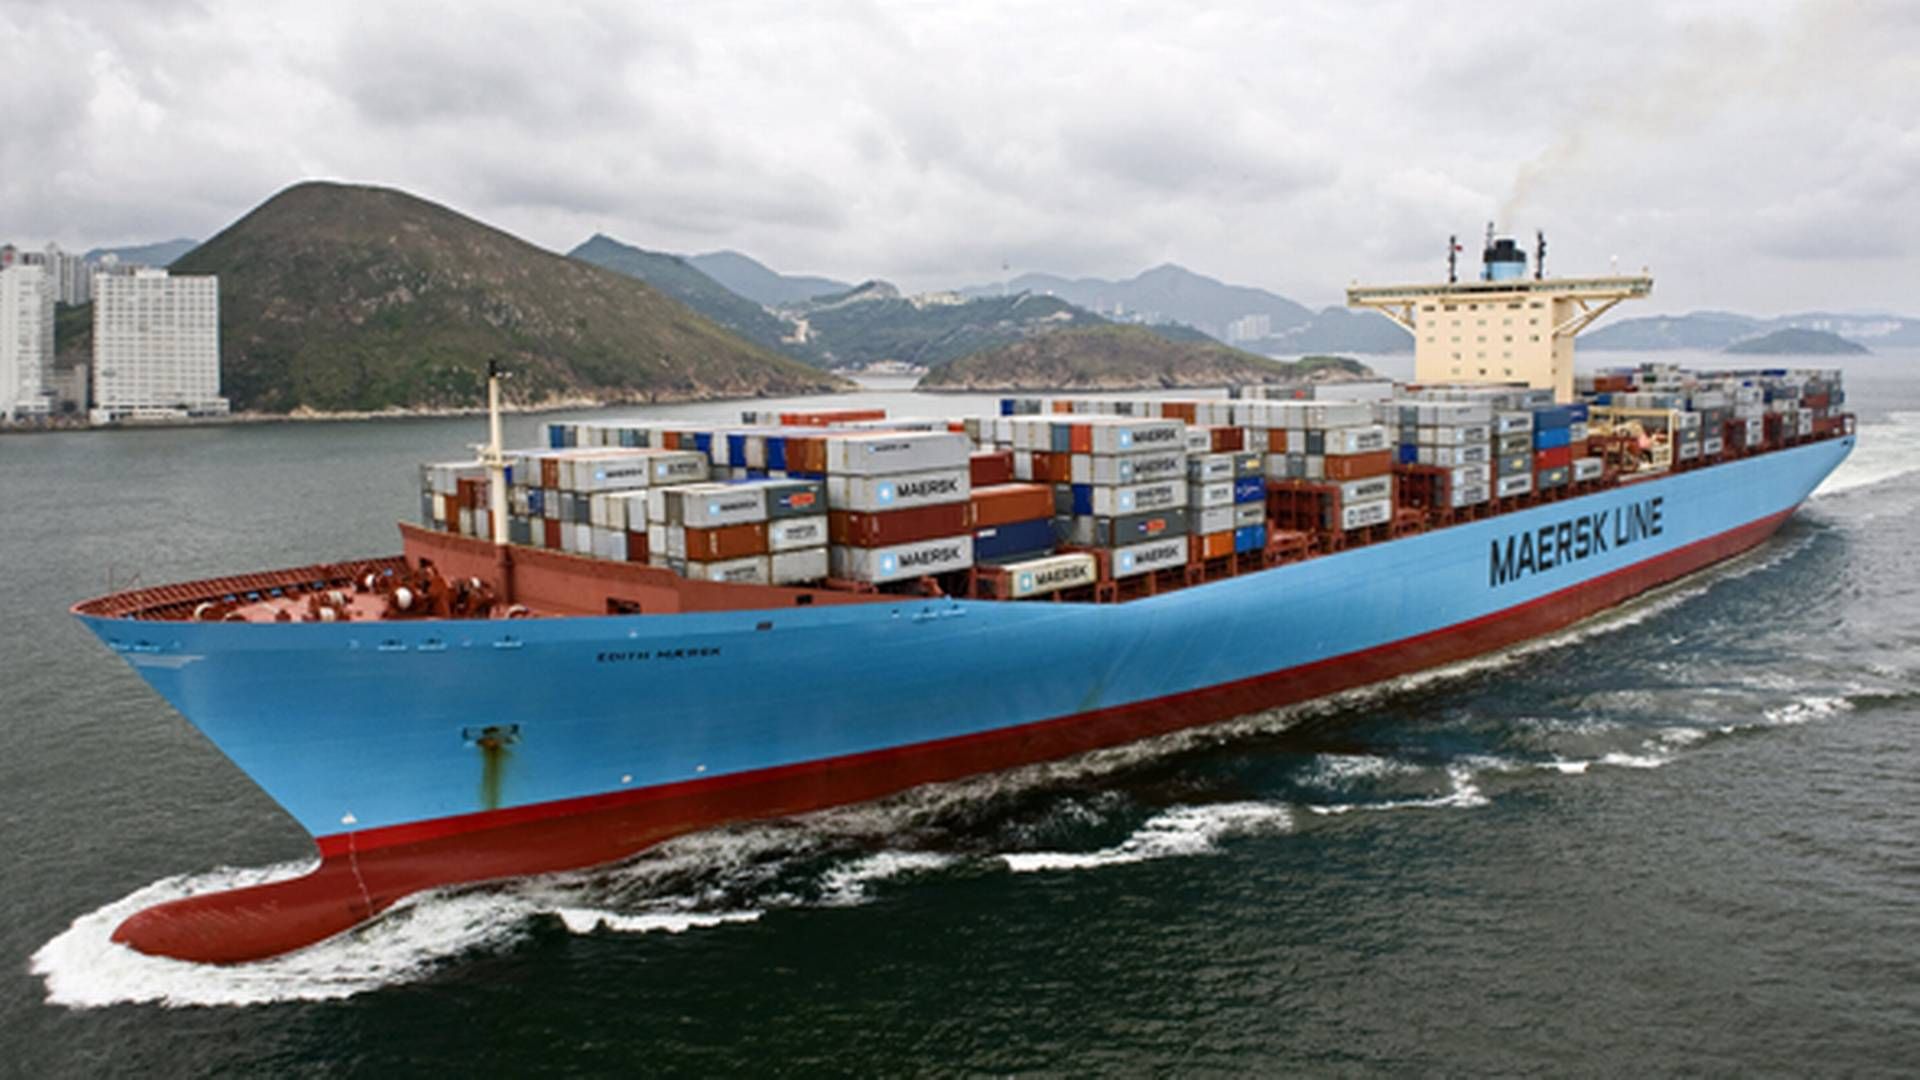 Foto: Maersk Line